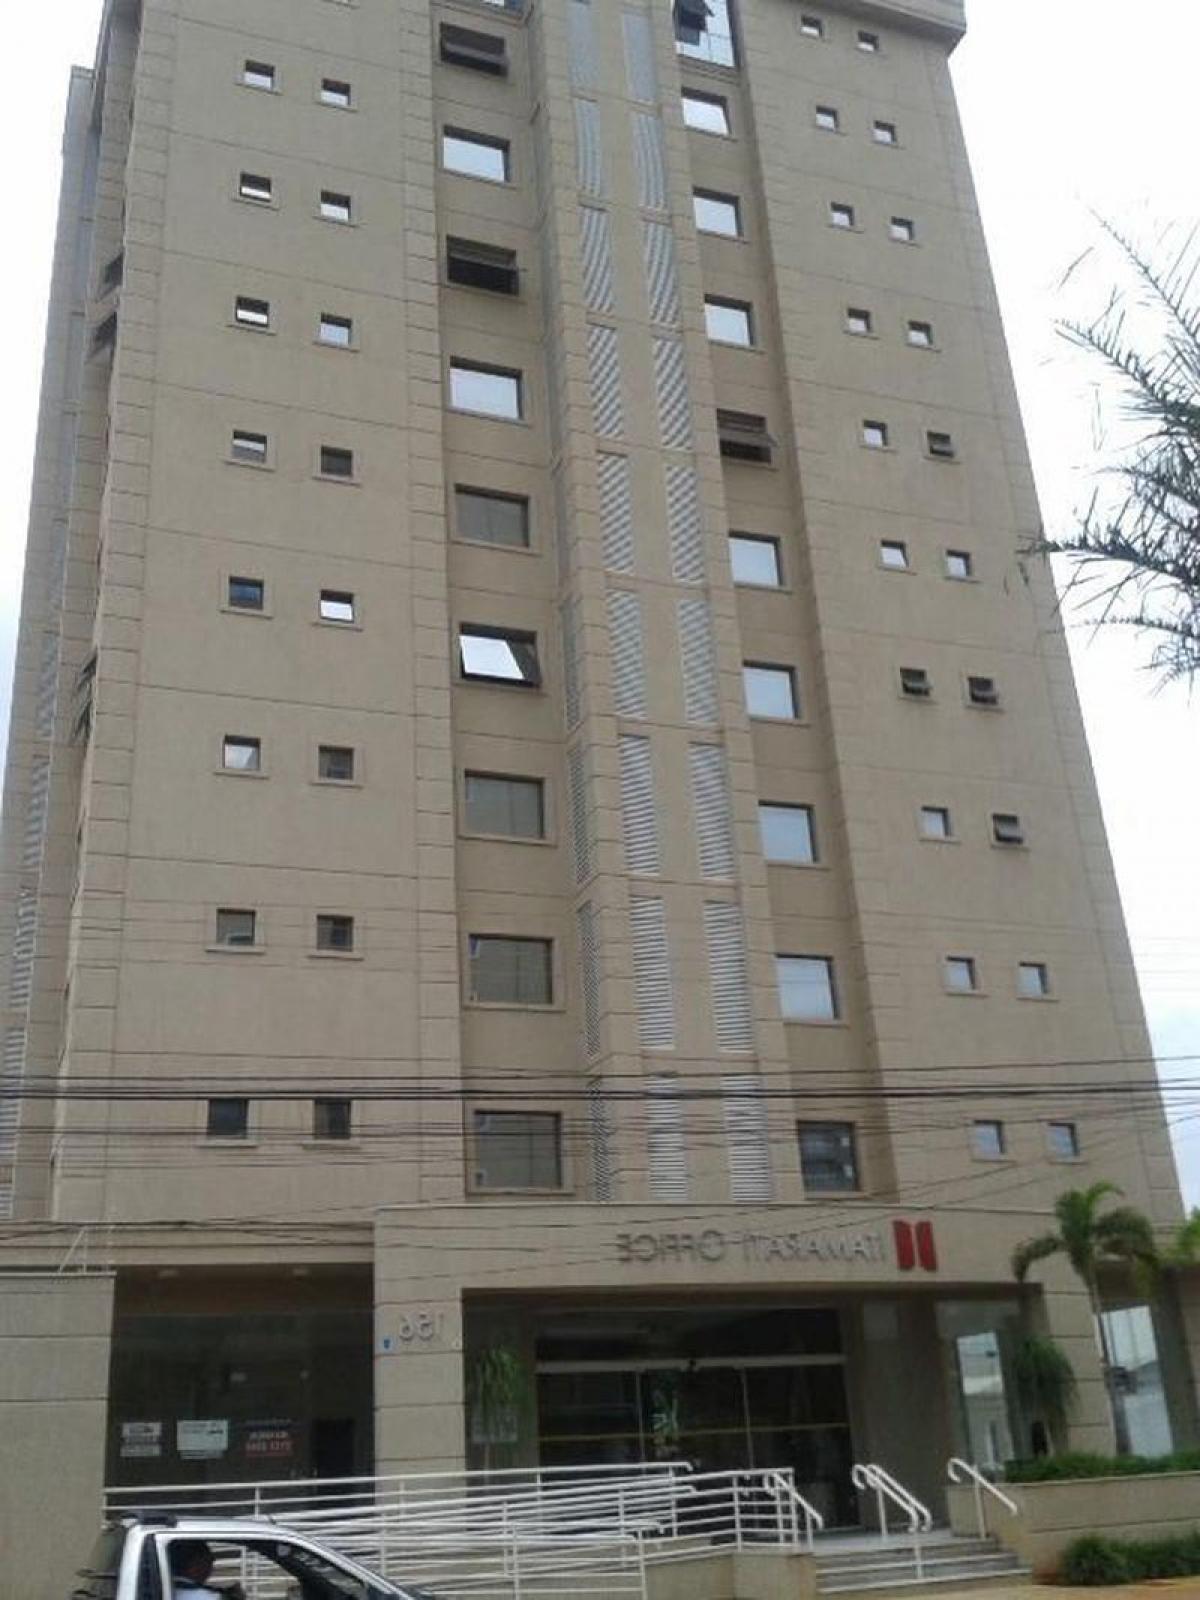 Picture of Commercial Building For Sale in Ribeirao Preto, Sao Paulo, Brazil